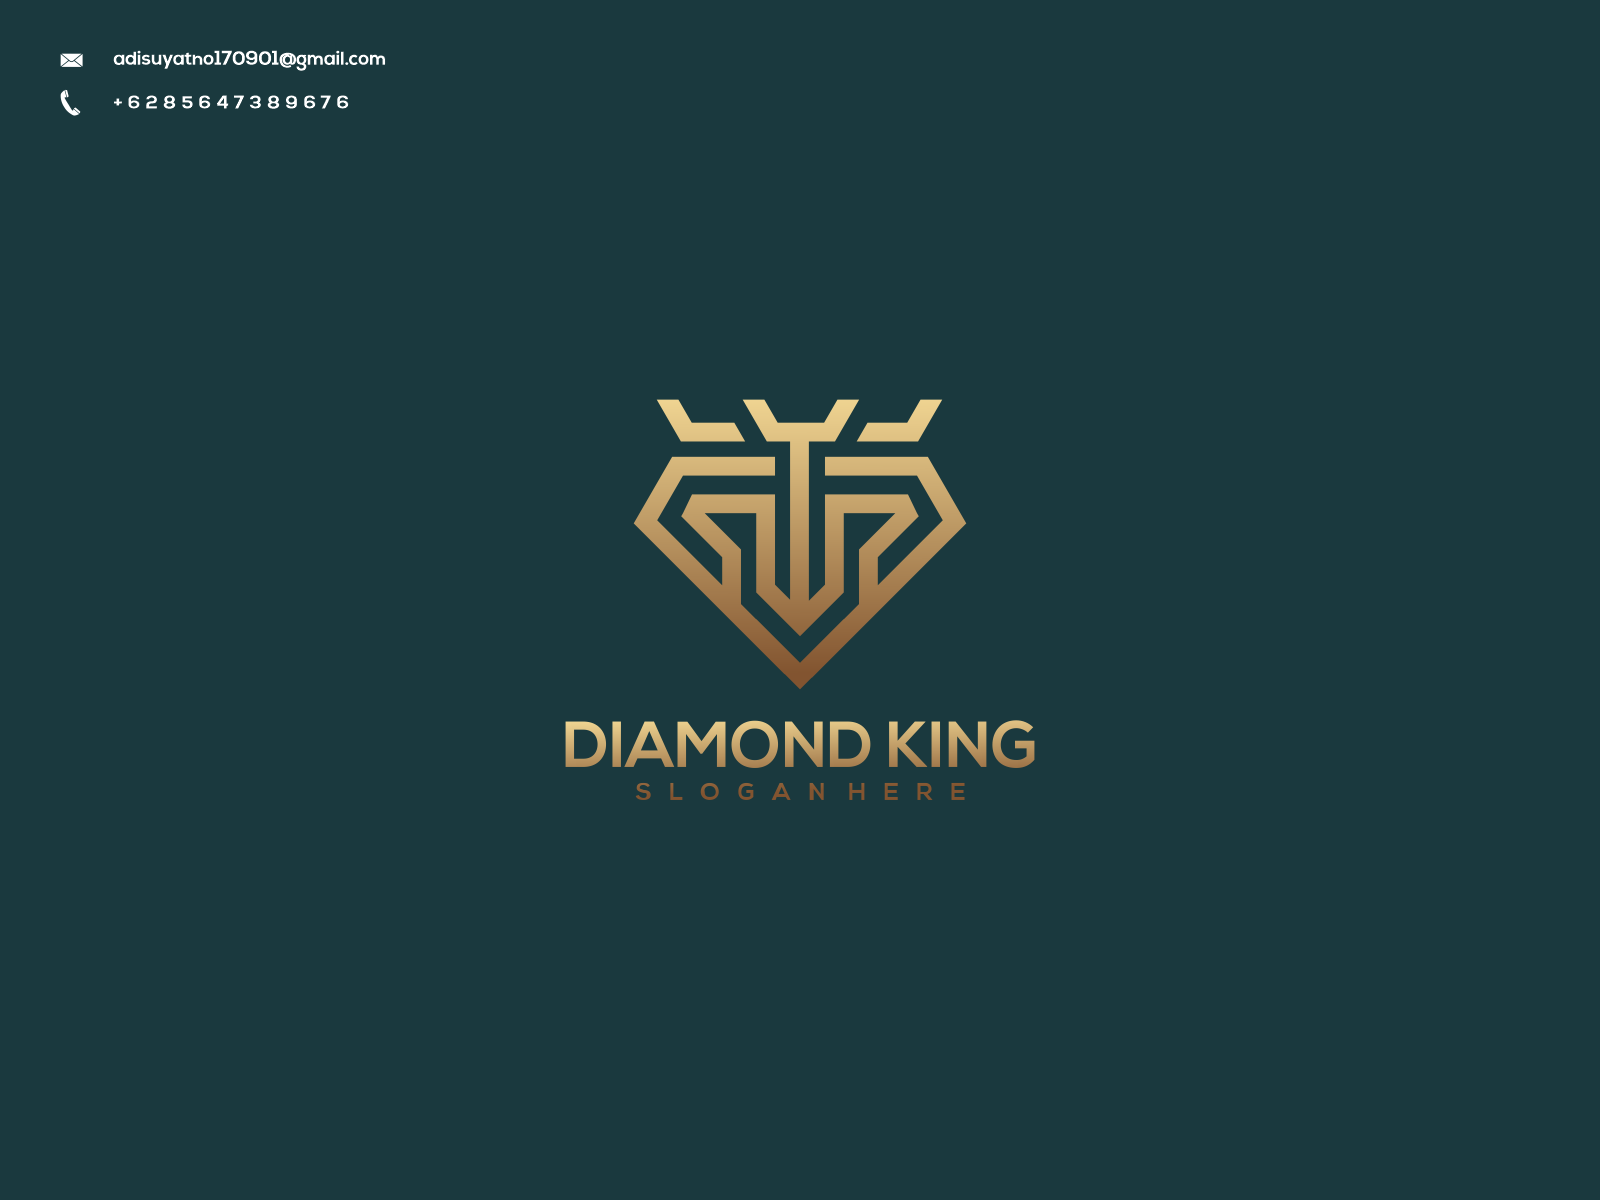 Diamond King logo by artno_graphic on Dribbble